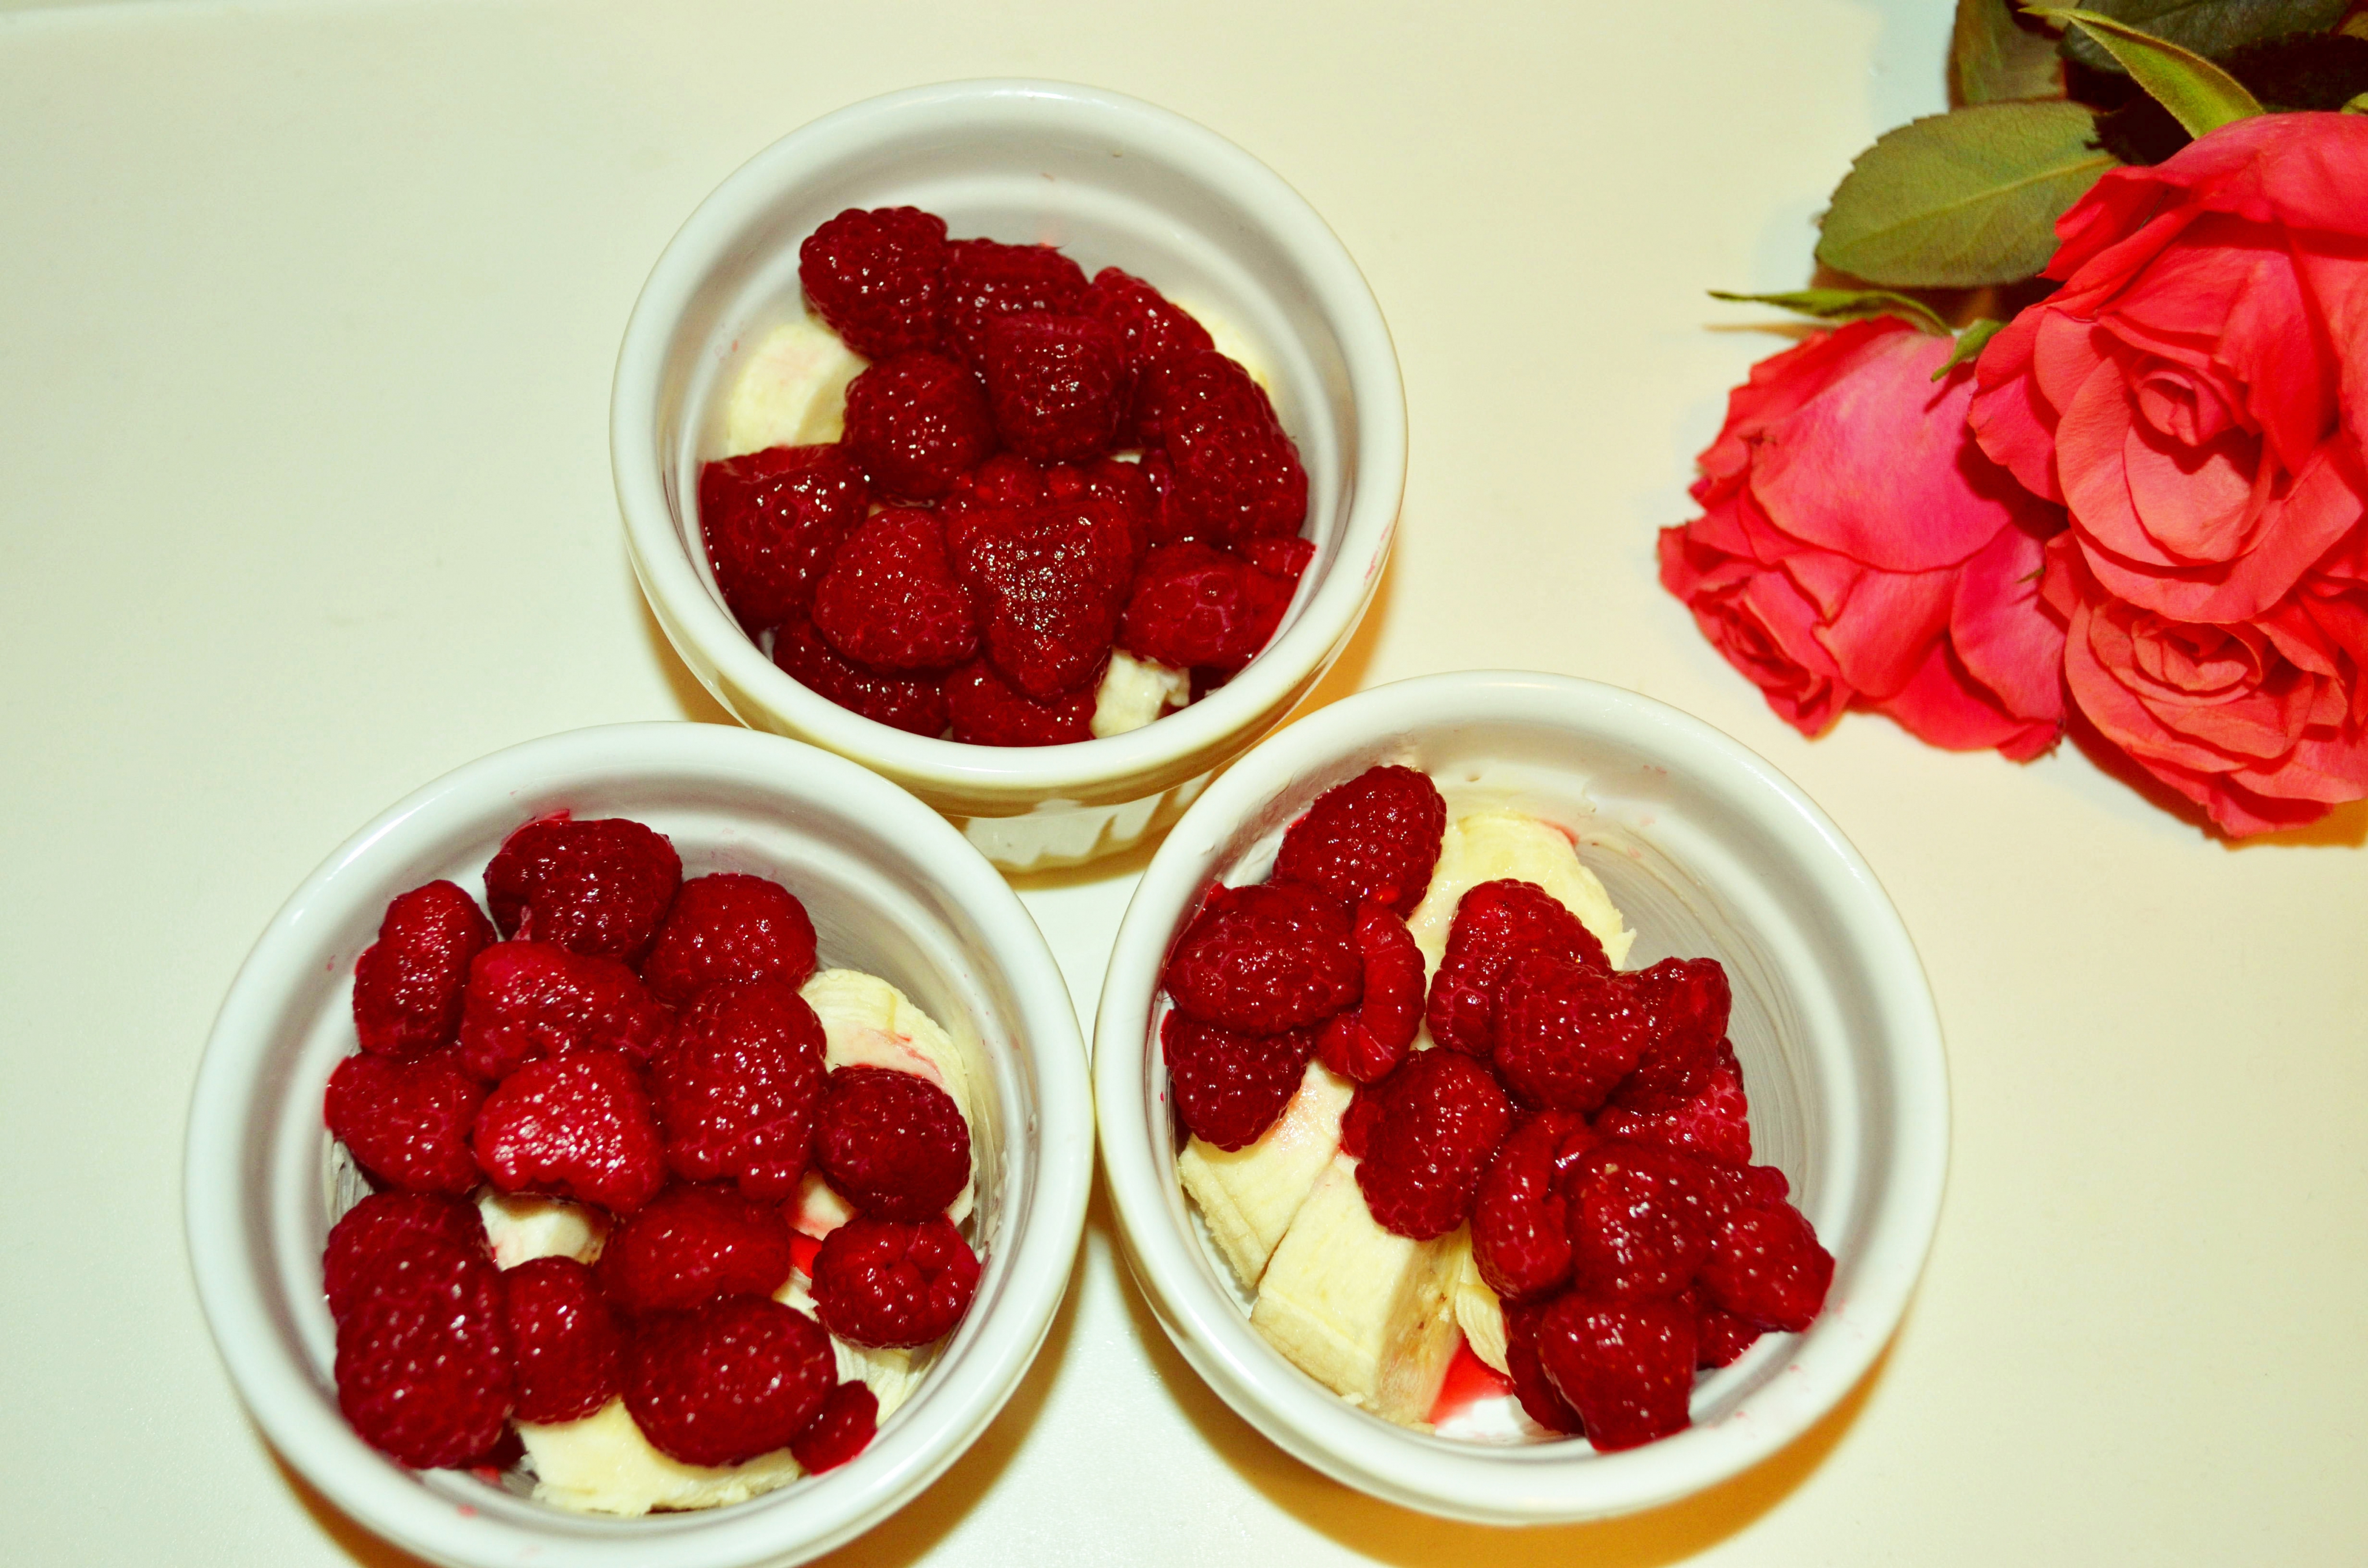 Raspberries and banana crumble with orange ice-cream!